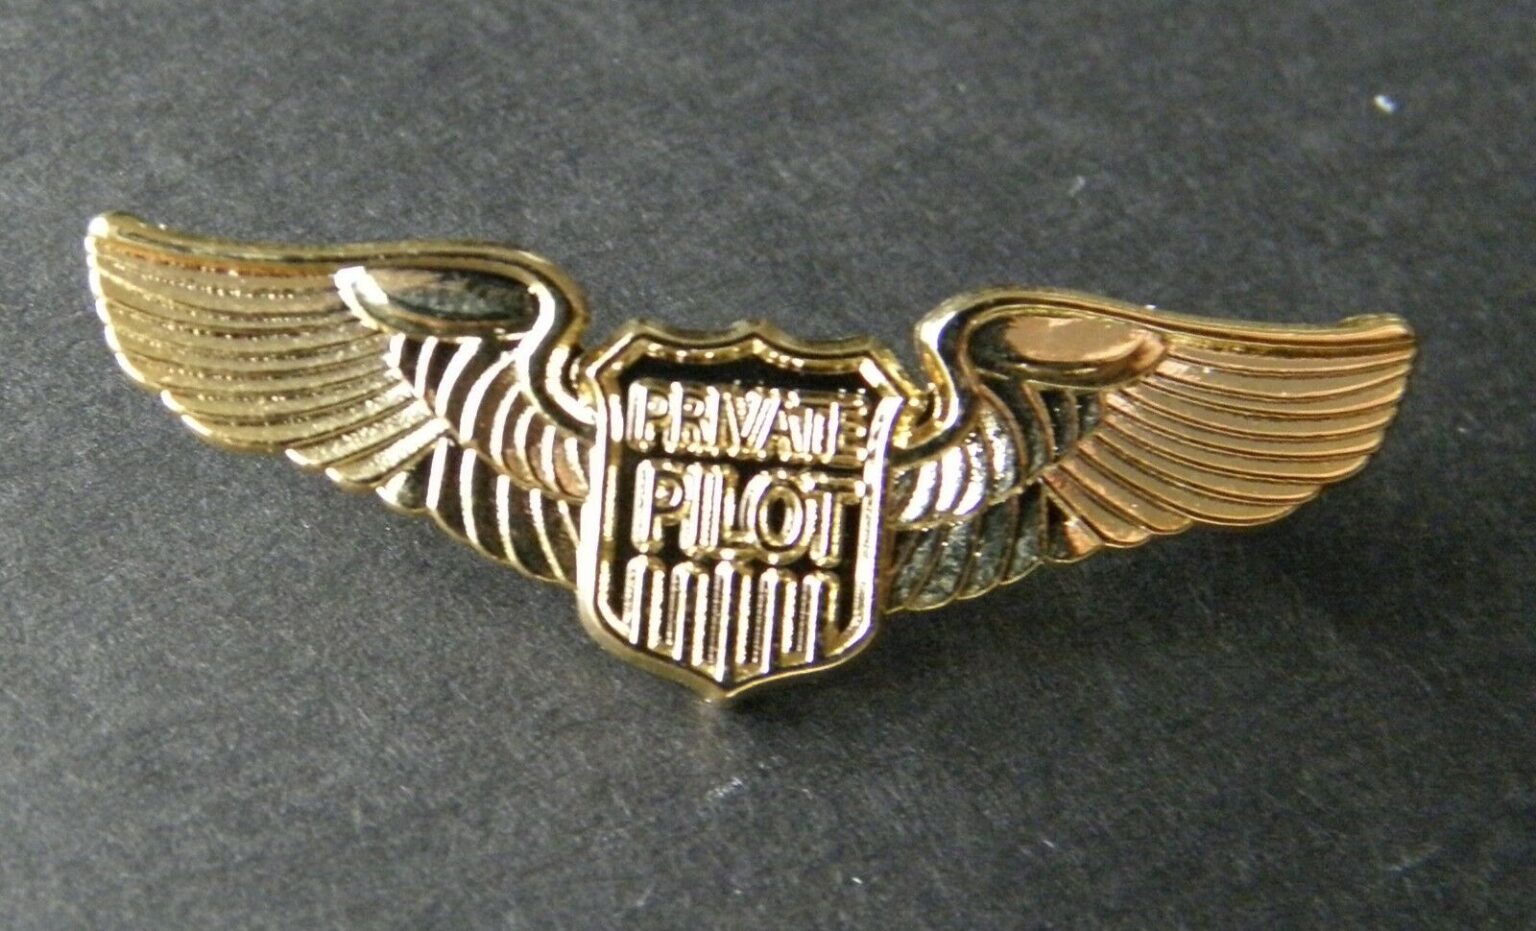 Private Pilot Aircraft Civilian Gold Colored Wings Lapel Pin Badge 15